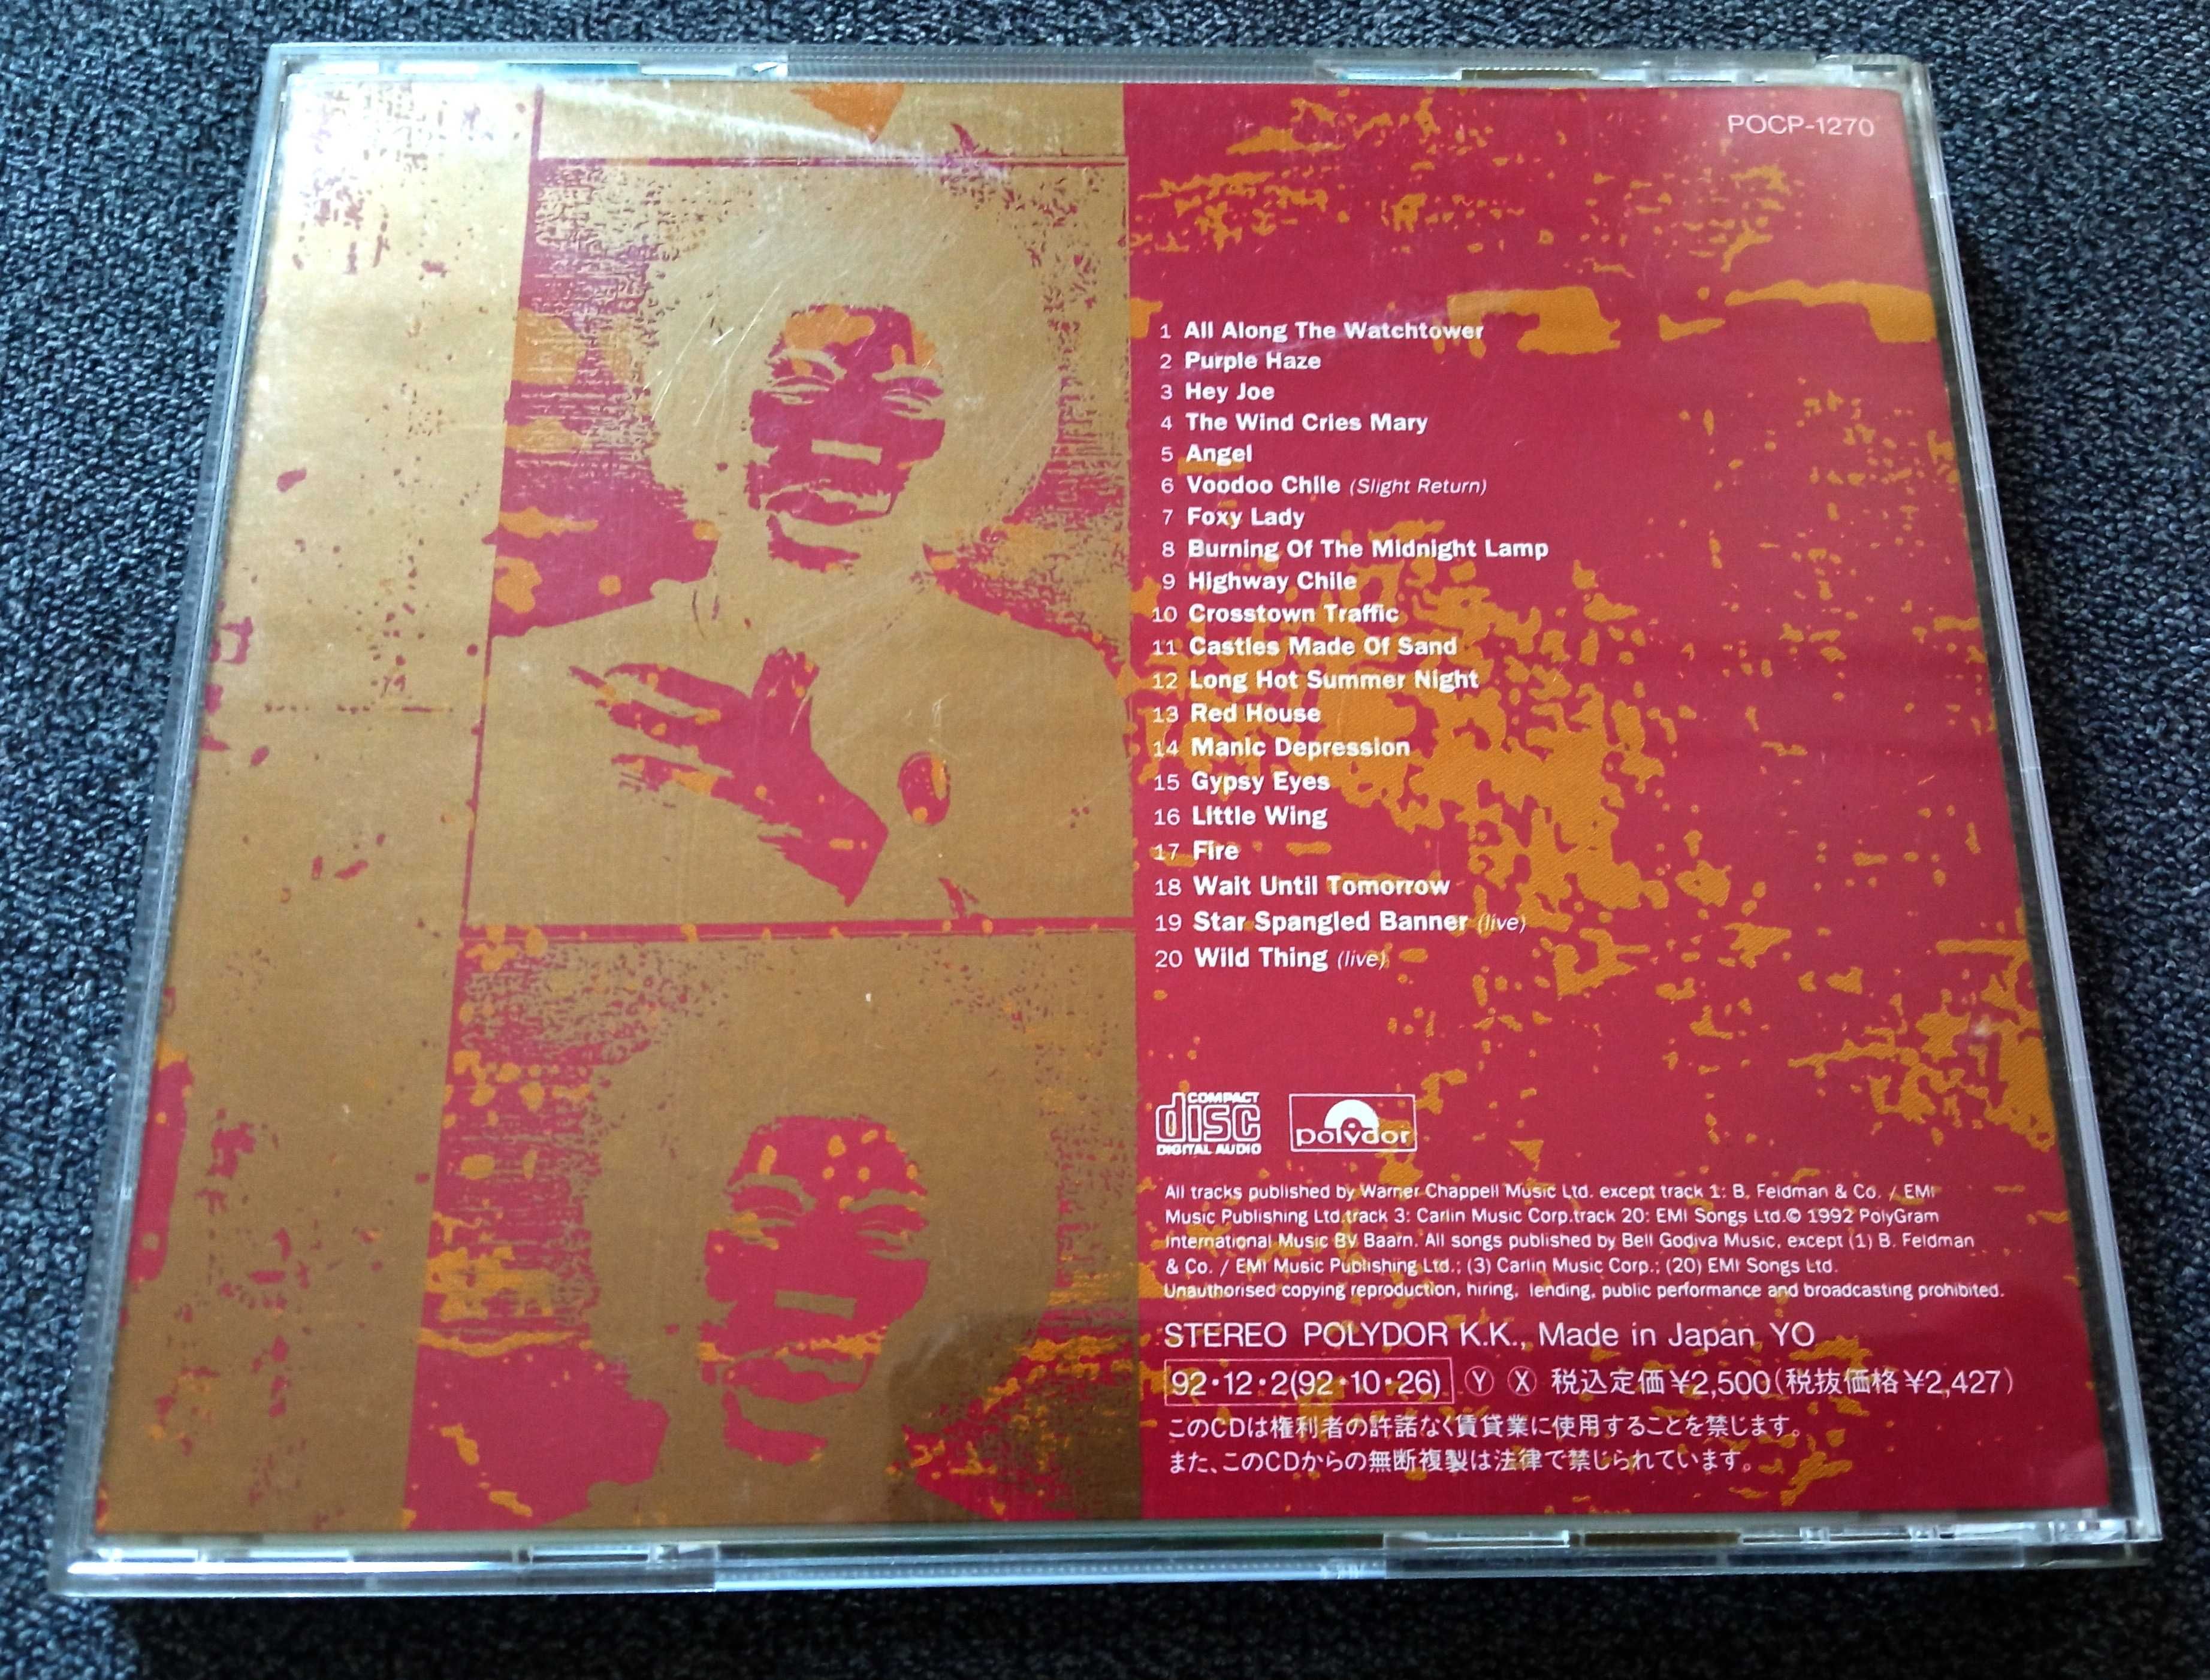 Jimi Hendrix The Ultimate Experience CD Japan Obi